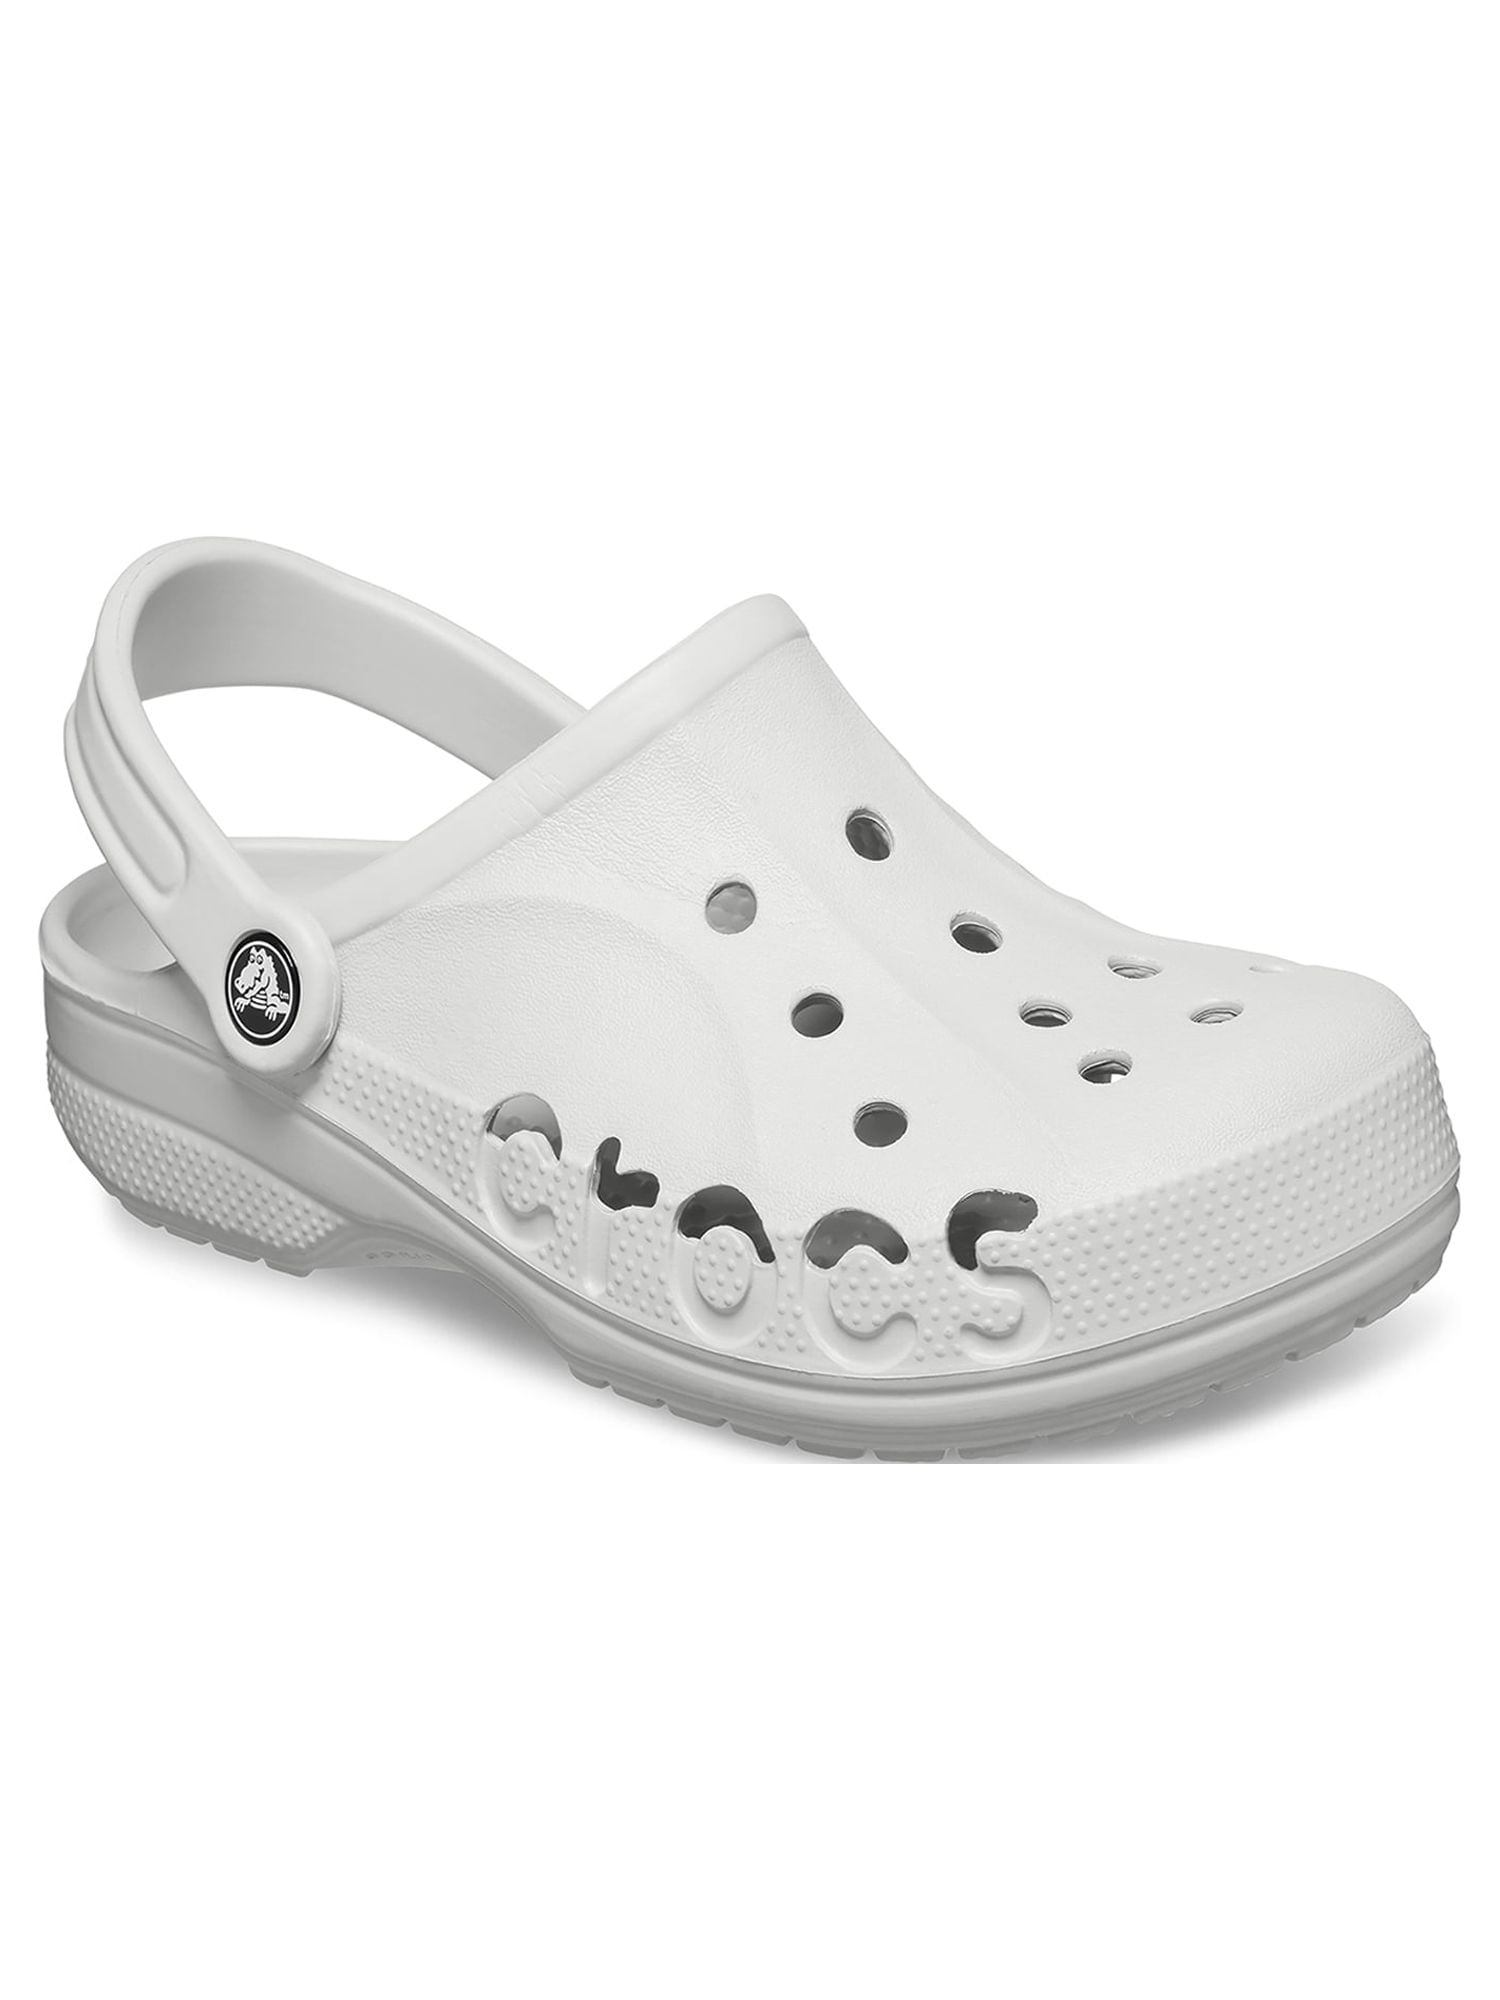 Crocs Men's and Women's Unisex Baya Clog Sandals - Walmart.com